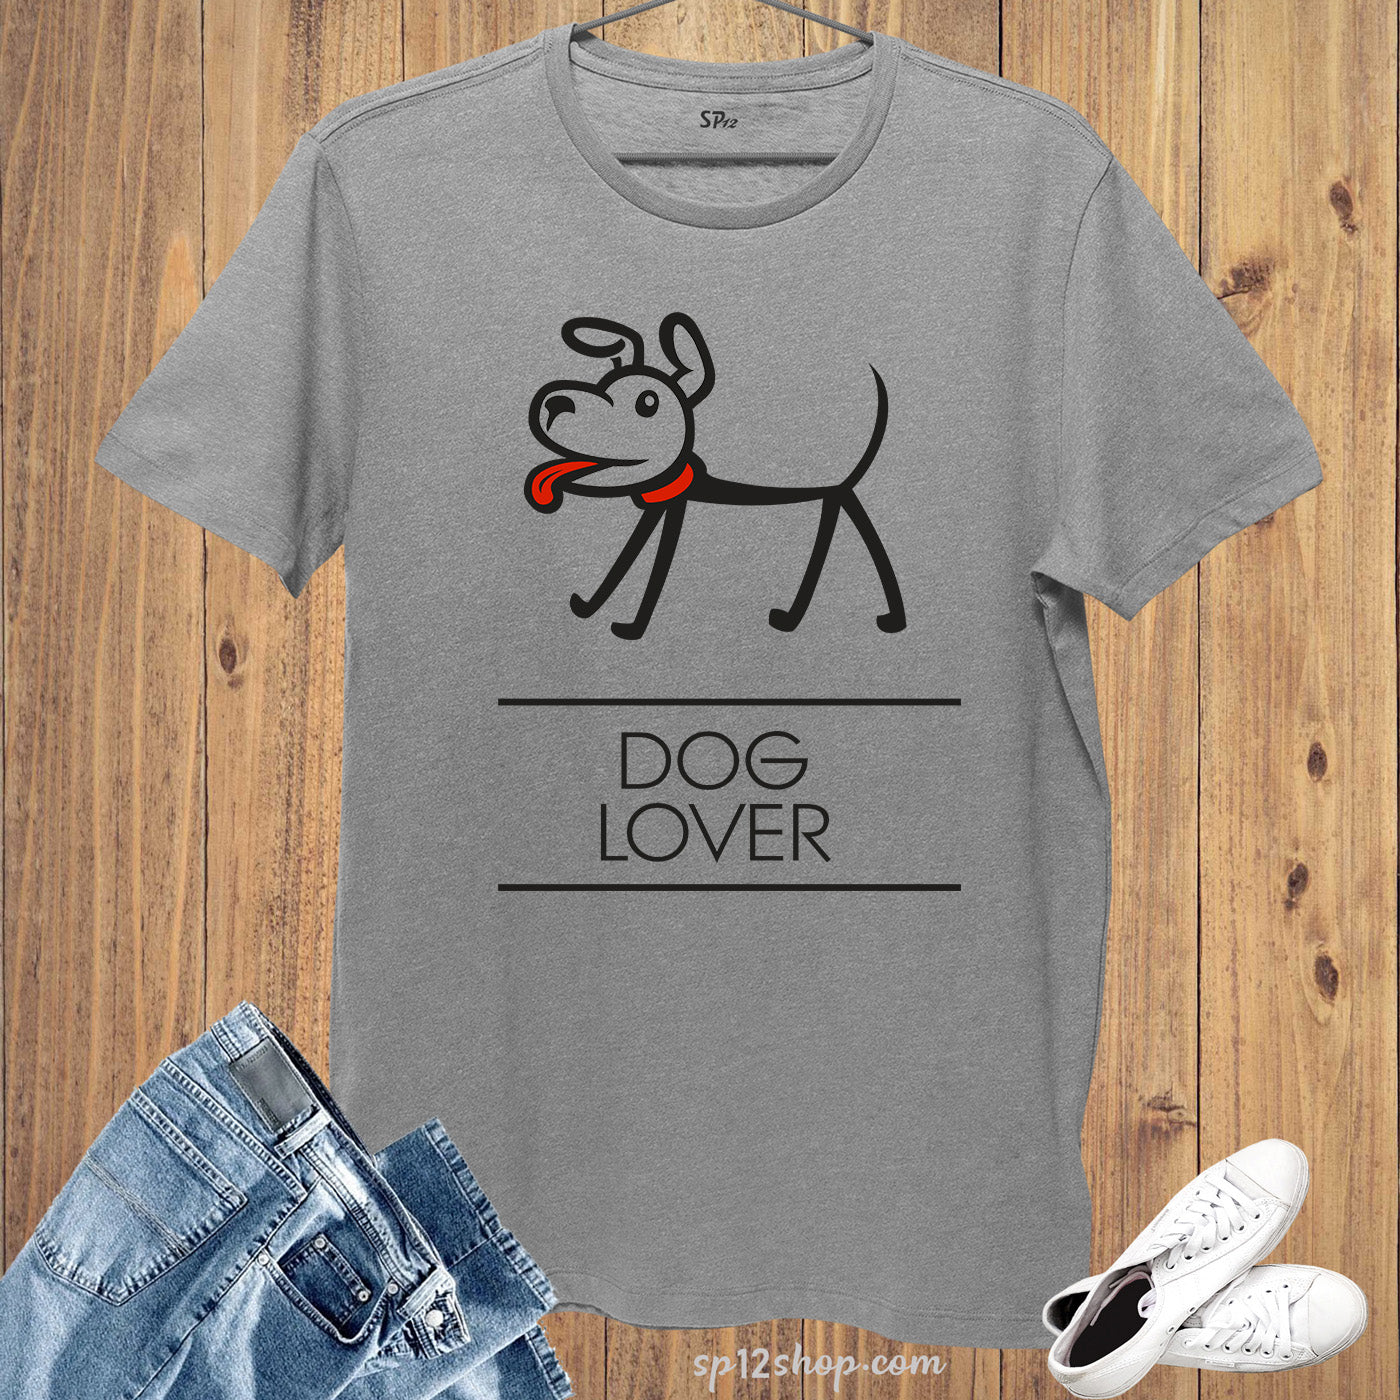 Dog Lover Funny Animal T Shirt